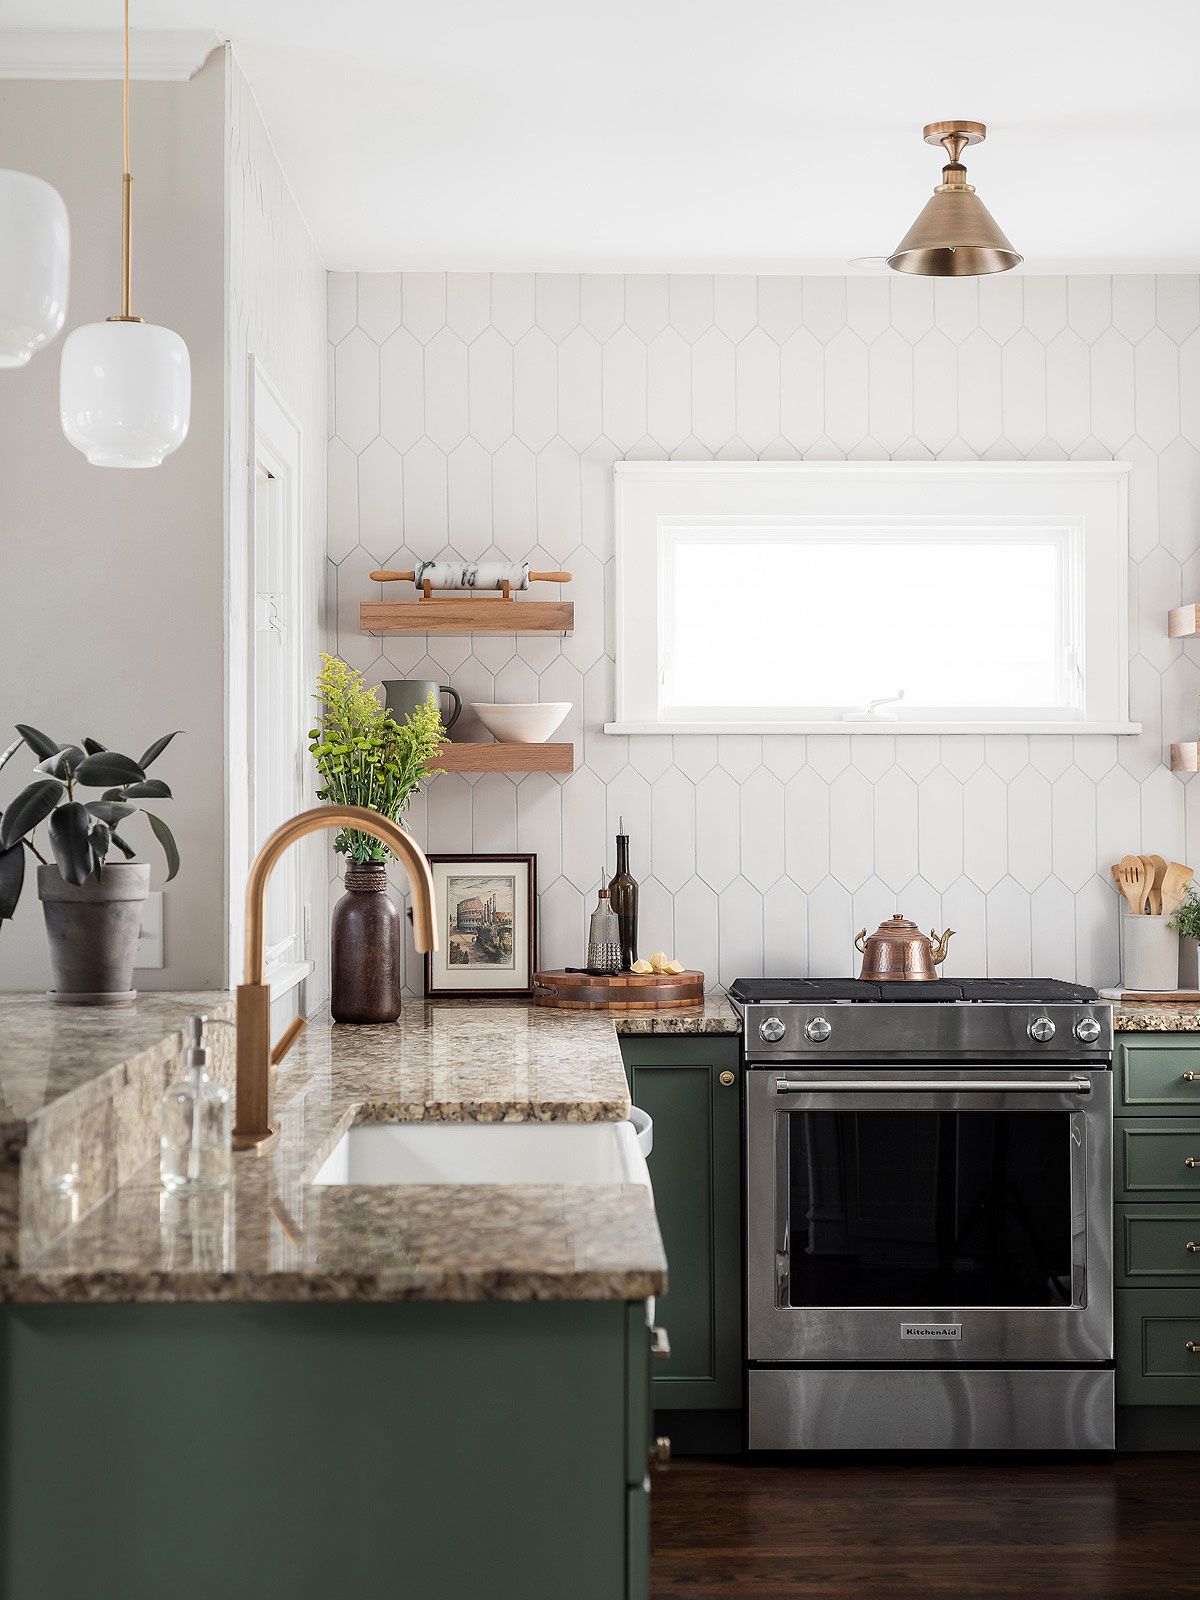 Granite Kitchen Countertops x Picket Tile Backsplash